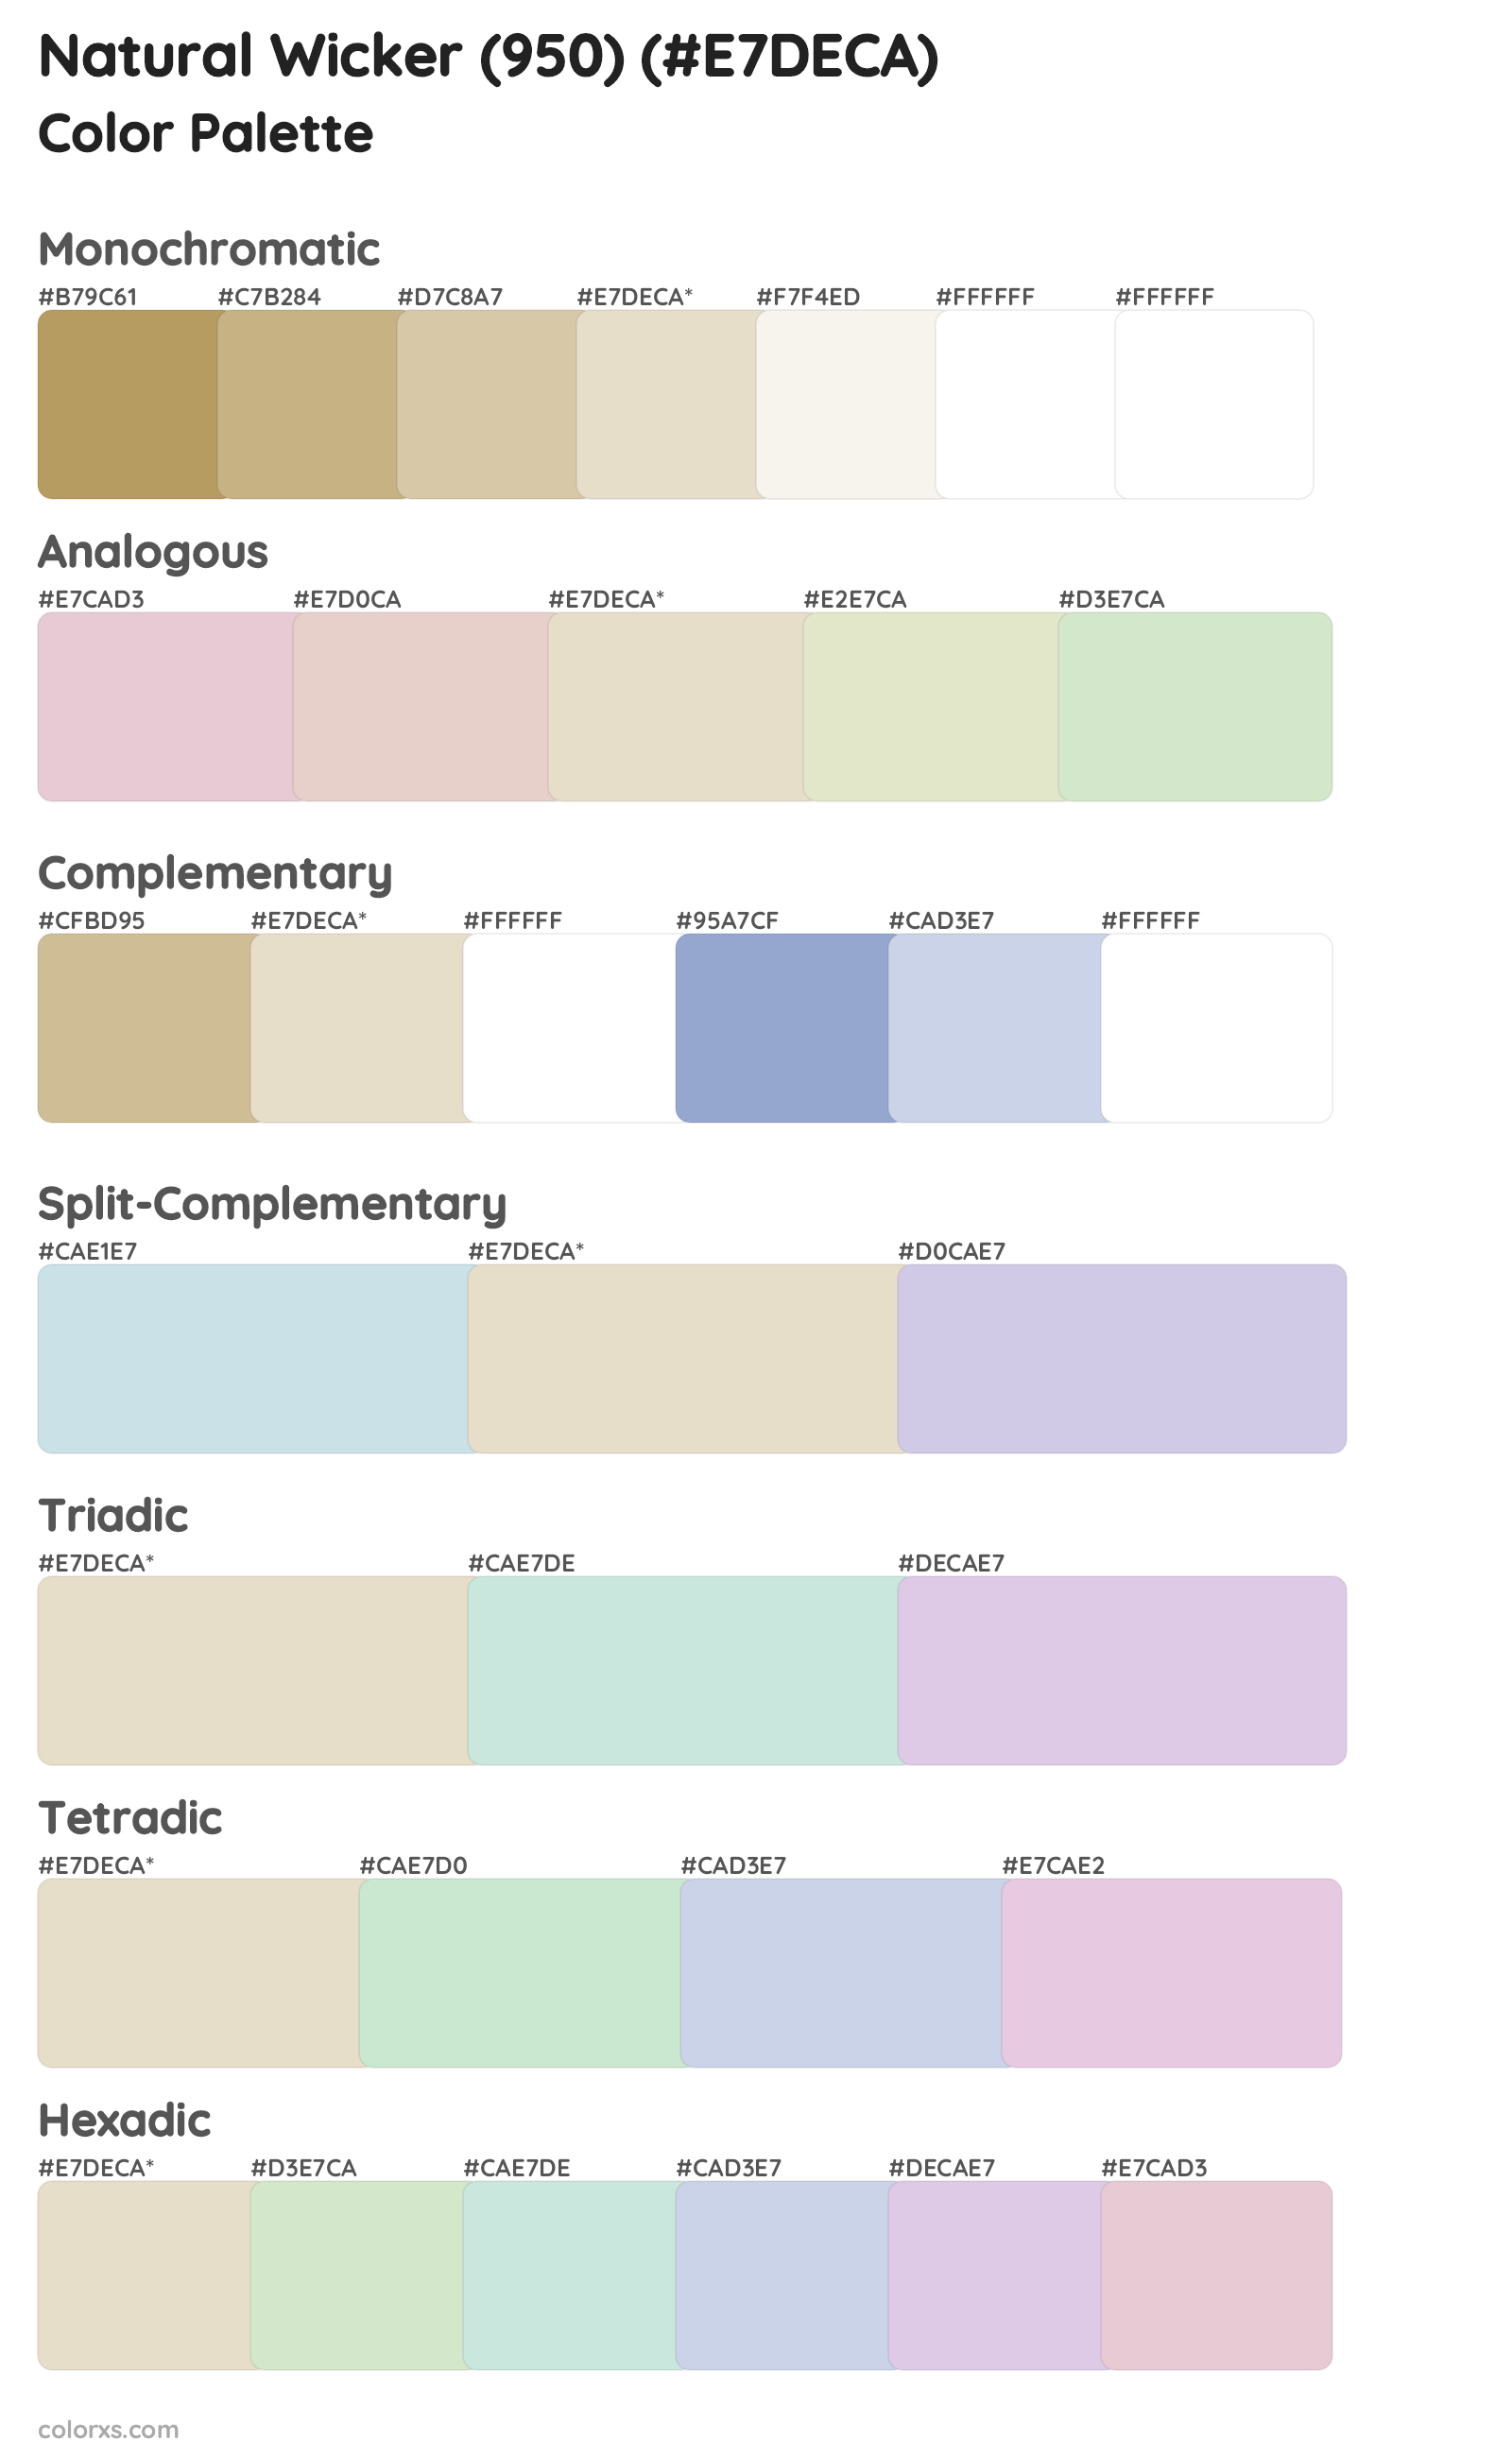 Natural Wicker (950) Color Scheme Palettes